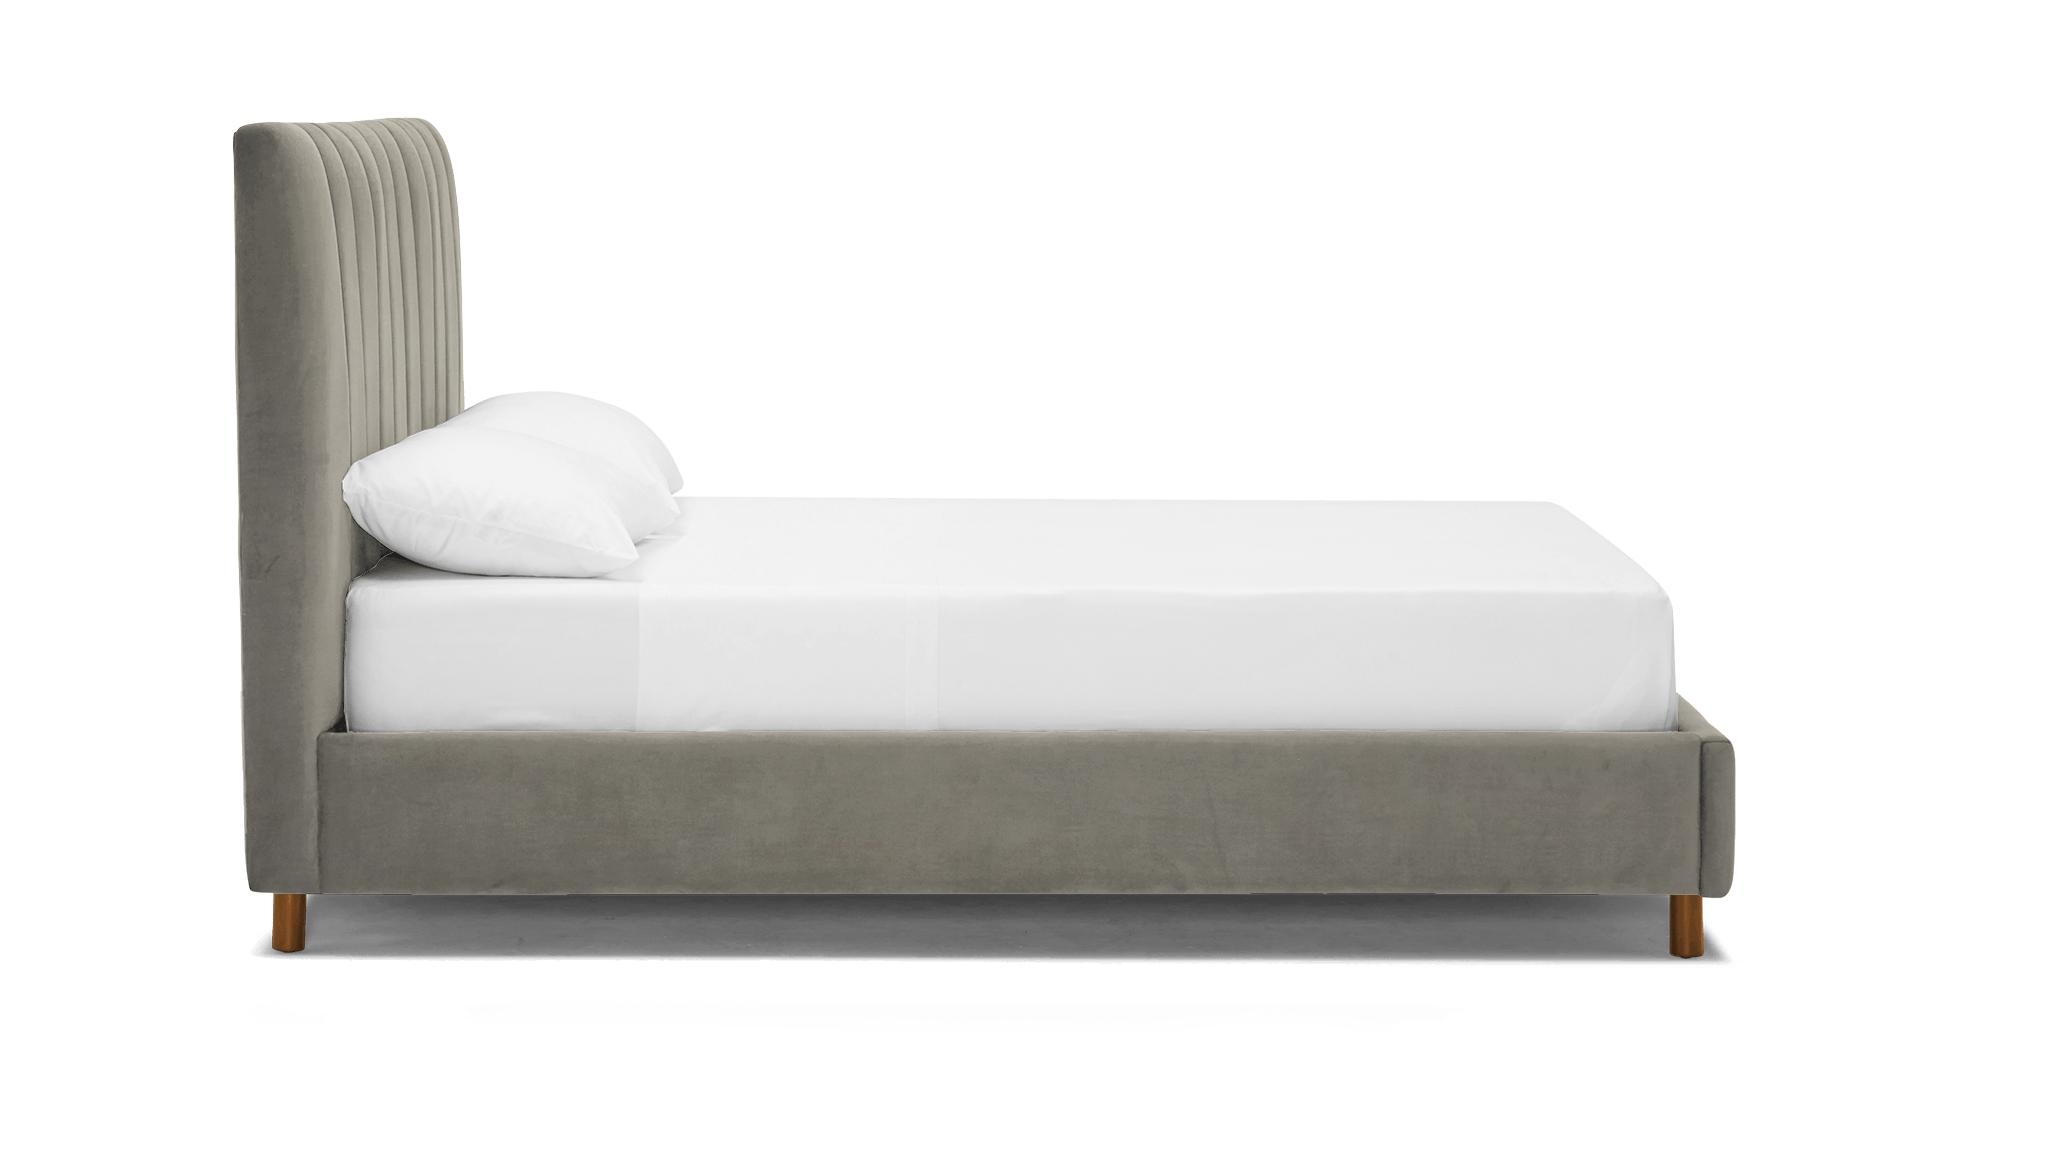 Gray Lotta Mid Century Modern Bed - Nico Ash - Mocha - Eastern King - Image 2